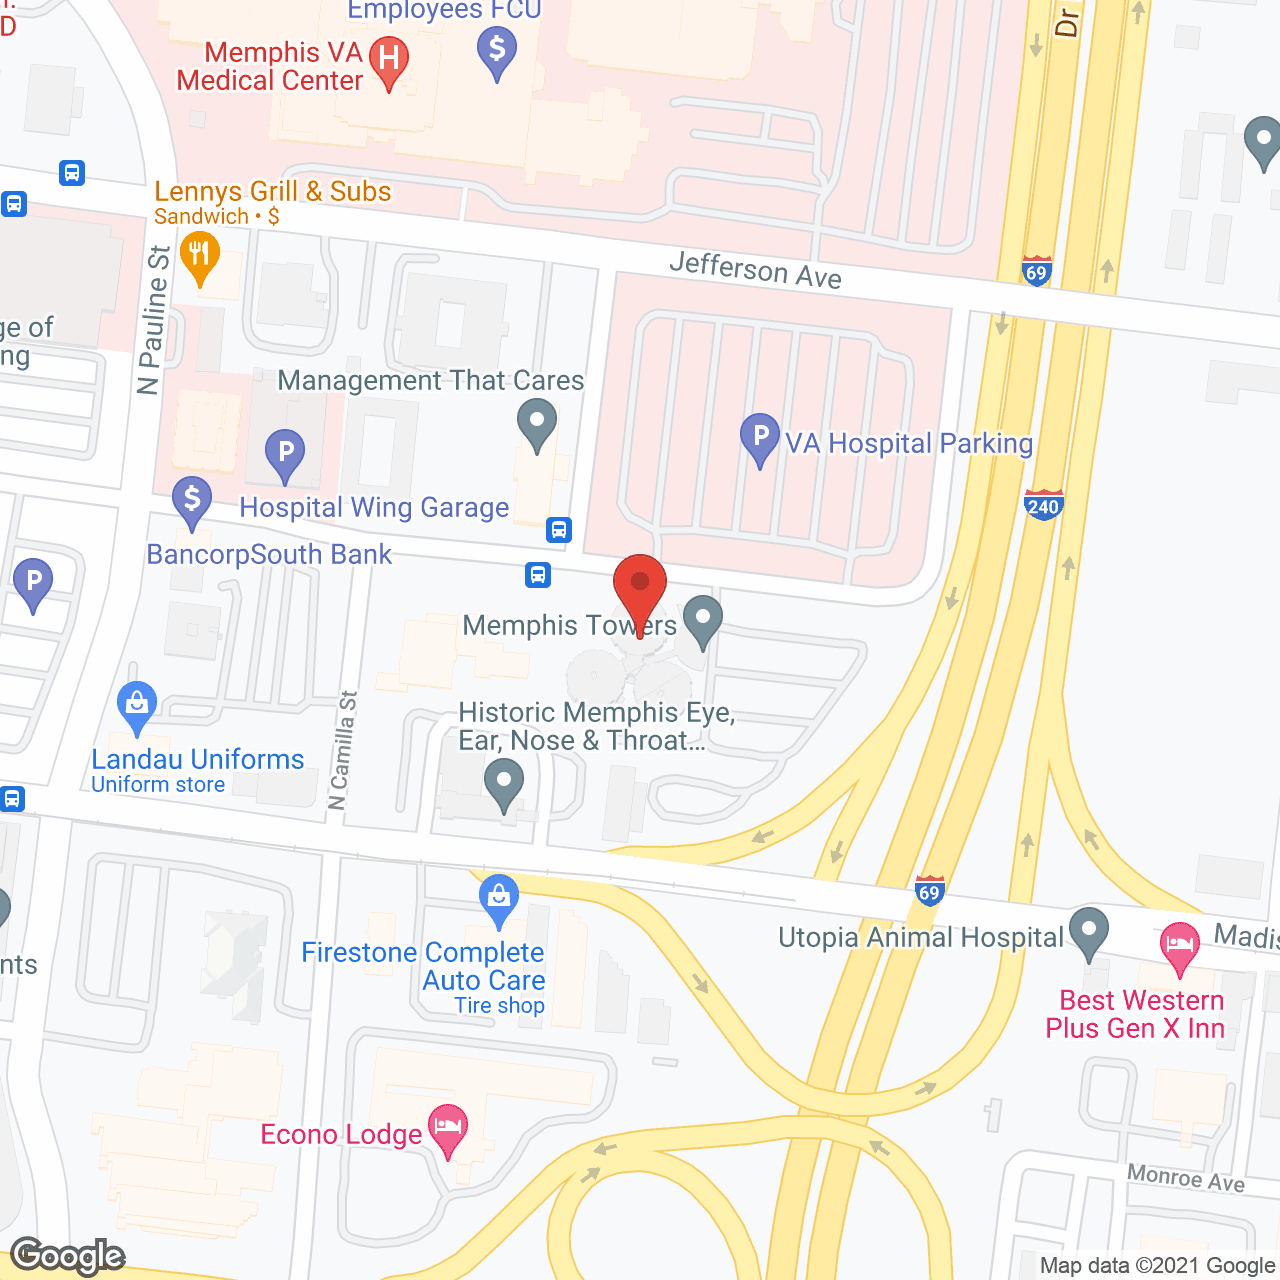 Memphis Towers in google map